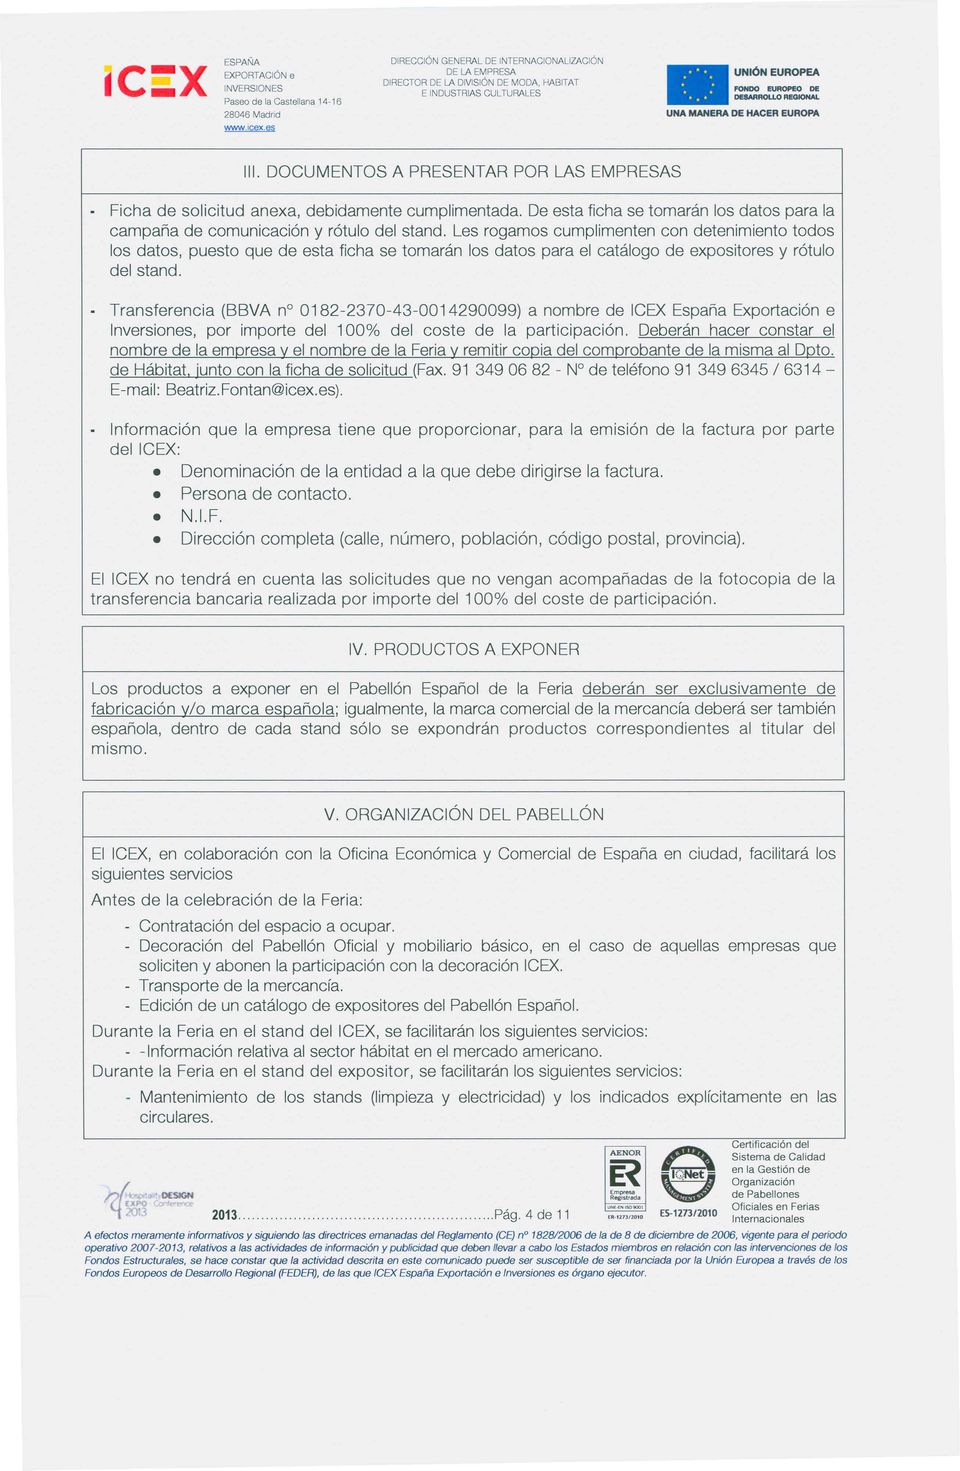 Transferencia (BBVA n 0182-2370-43-0014290099) a nombre de ICEX Espana Exportaci6n e Inversiones, por importe del 100% del coste de la participaci6n.